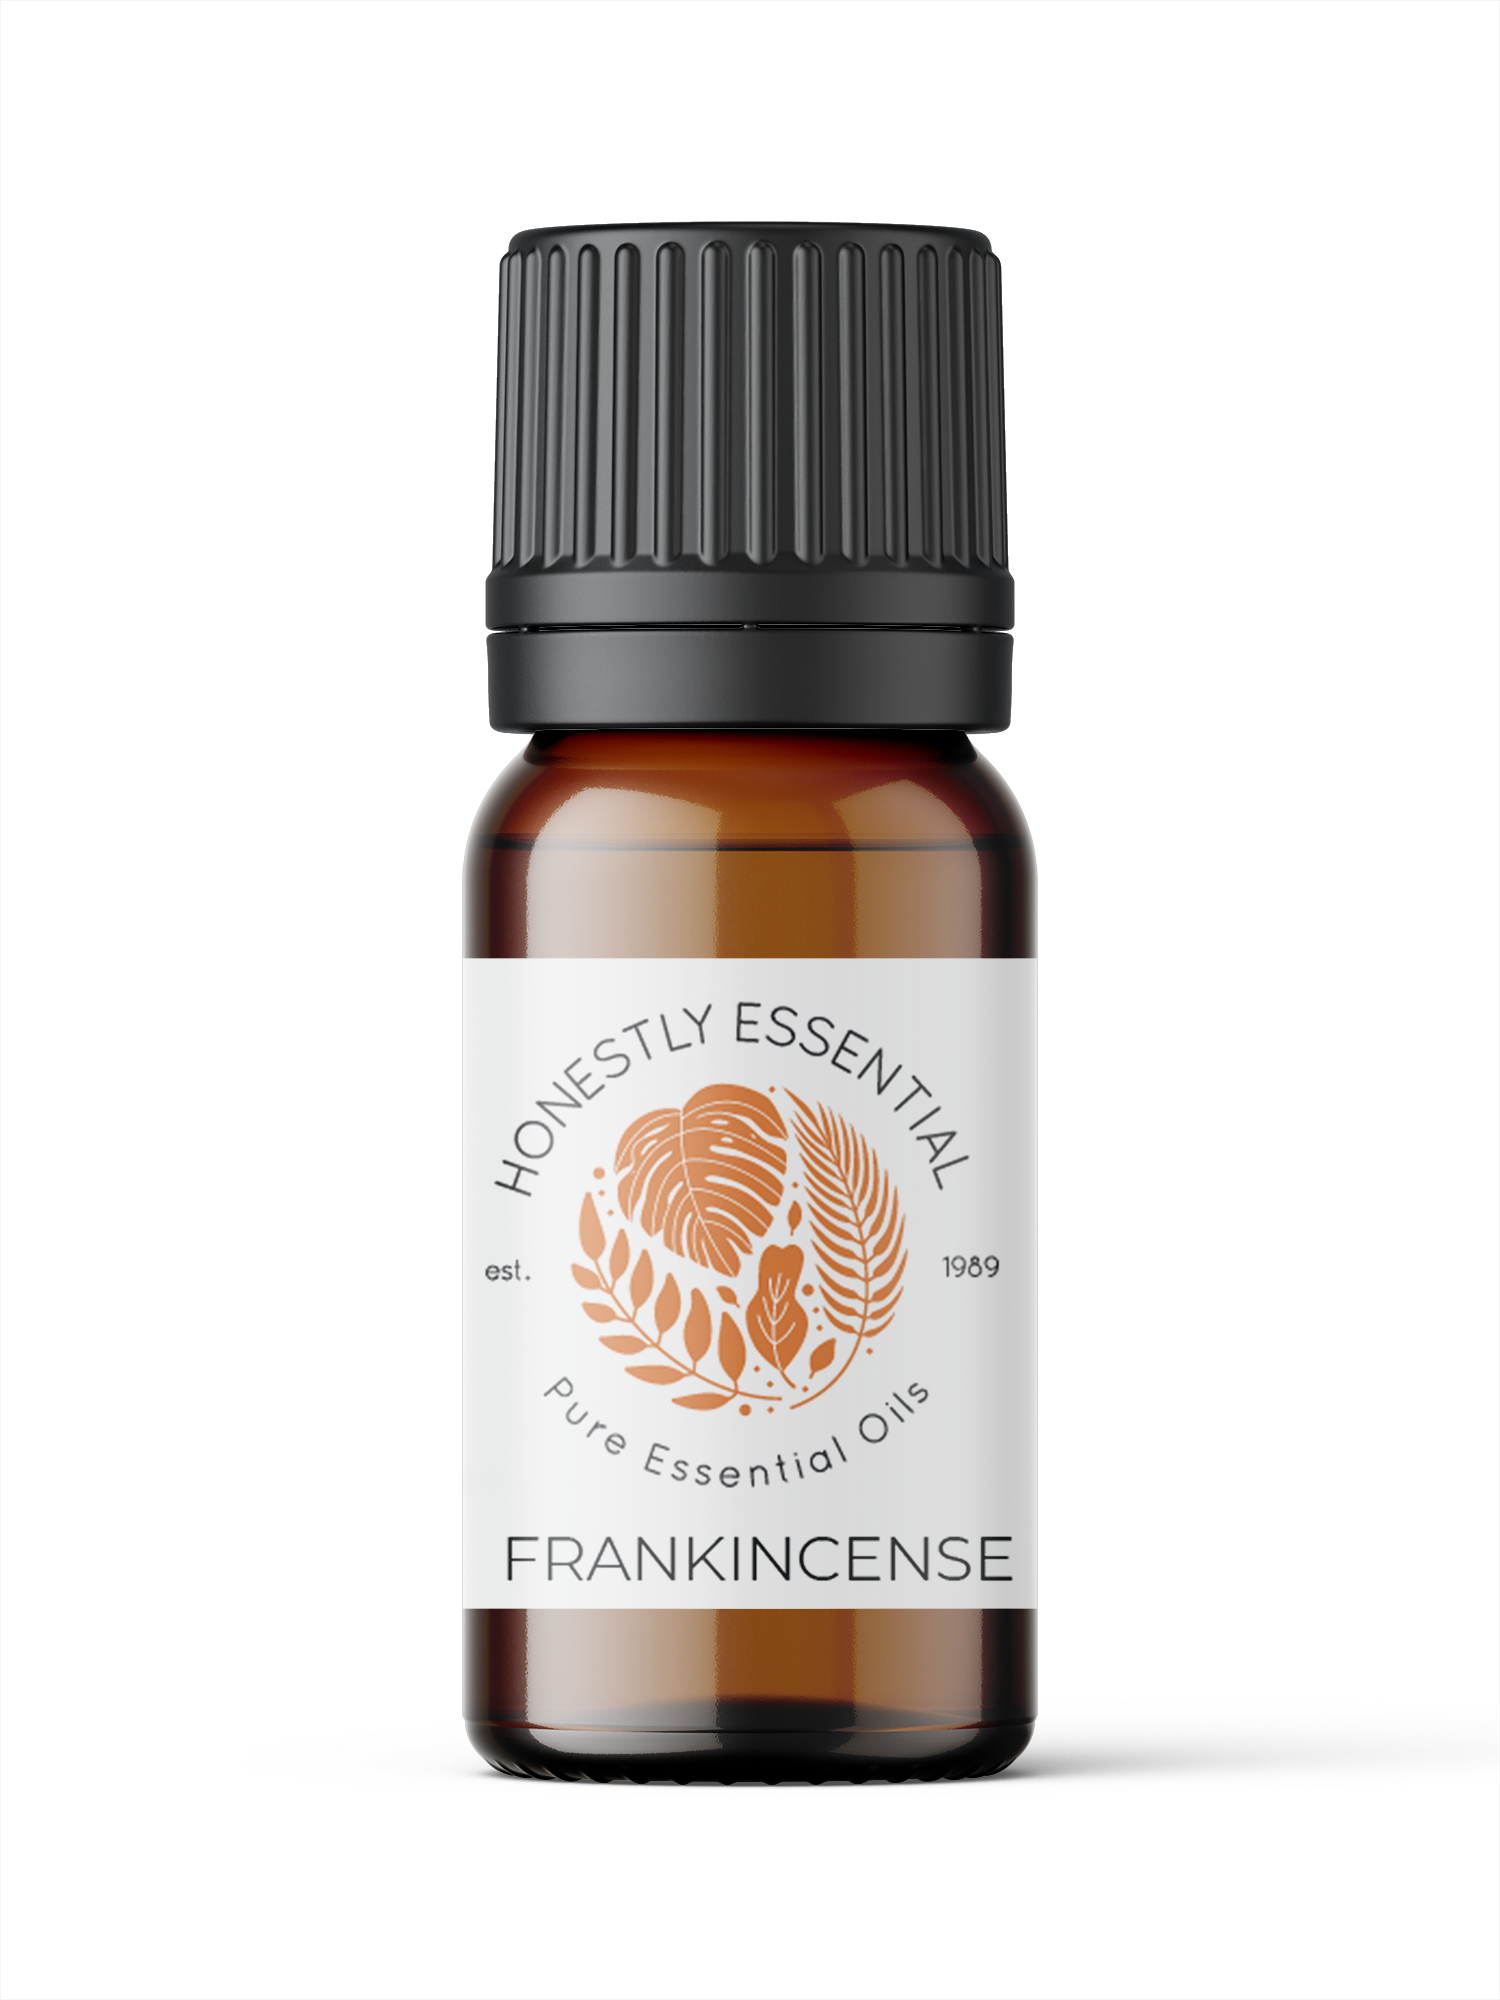 Frankincense Essential Oil - Essential Oils | Honestly Essential Oils anxiety, bruising, depression, gum, gum essential oil, gums, immunity, kid safe, skin, skin health, sores, wounds